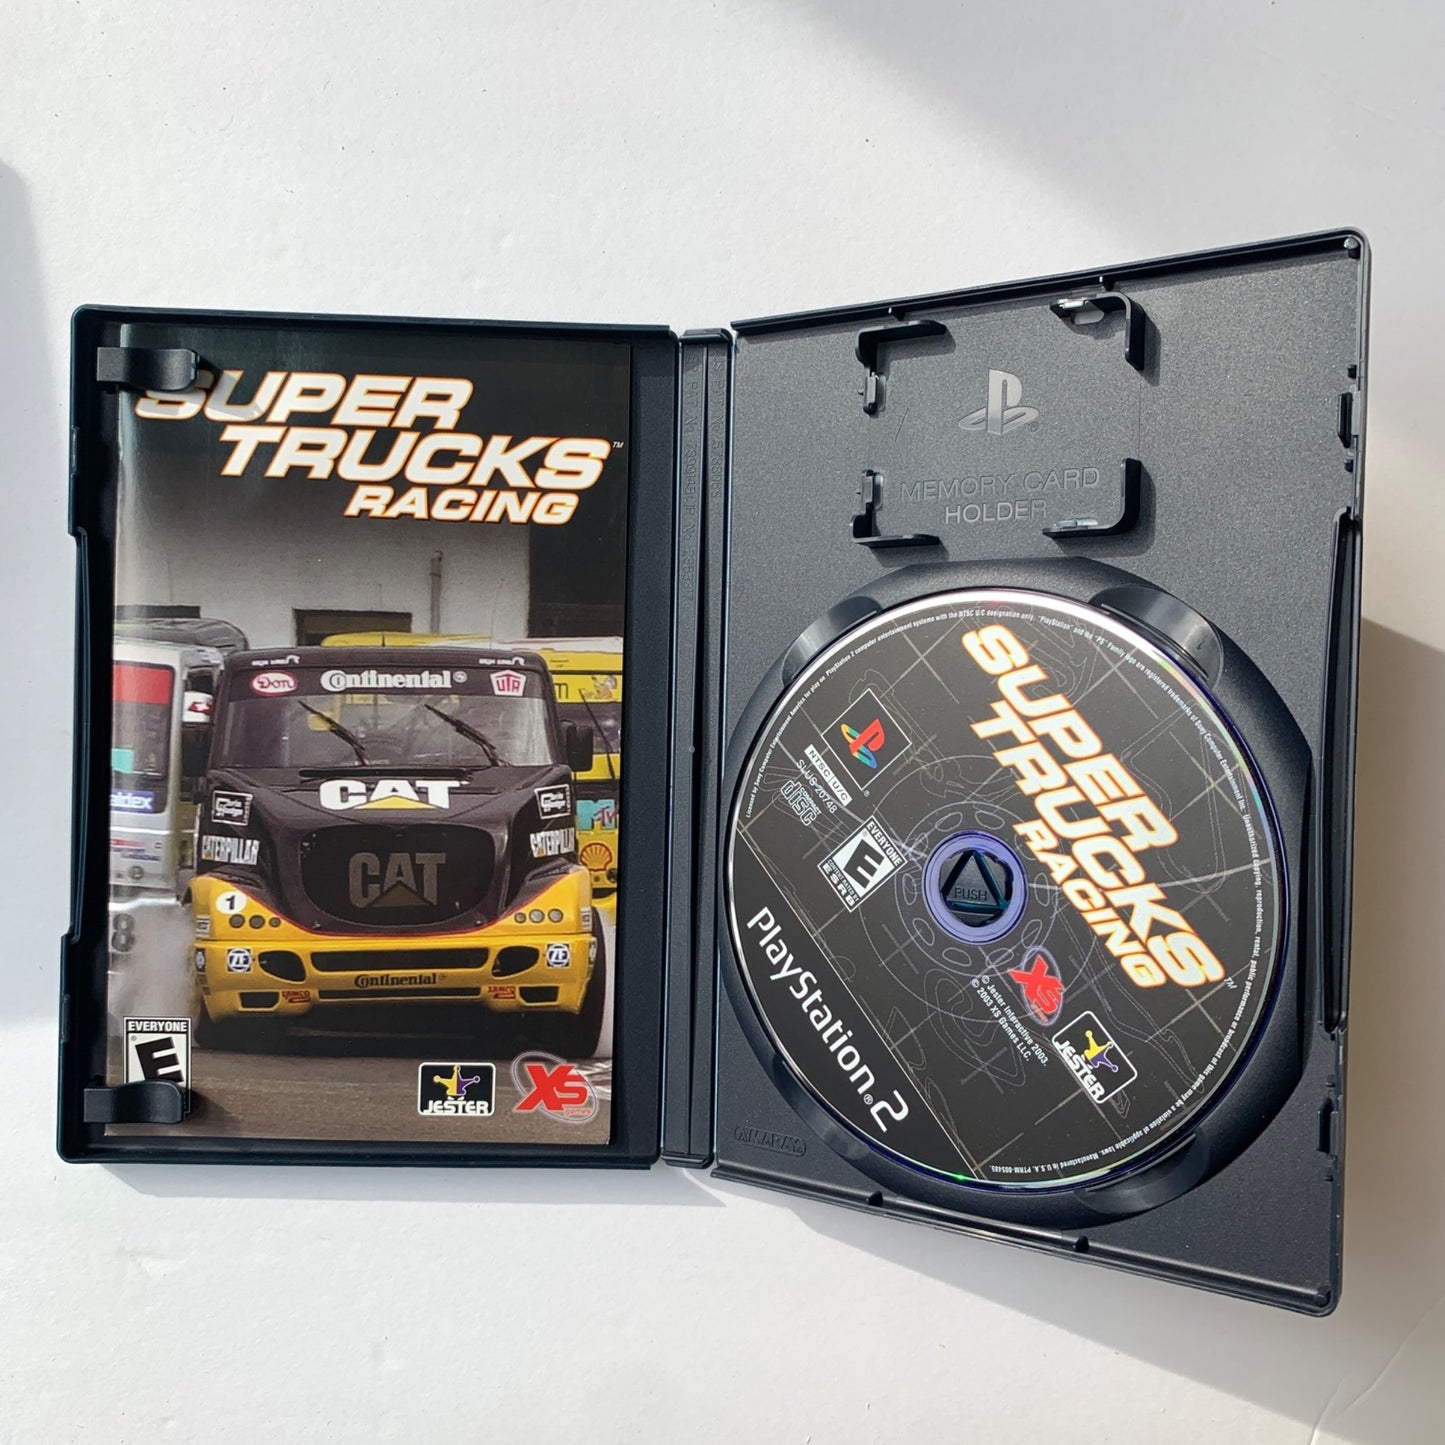 PS2 PlayStation 2 Super Trucks Racing Video Game Disc Case & Manual